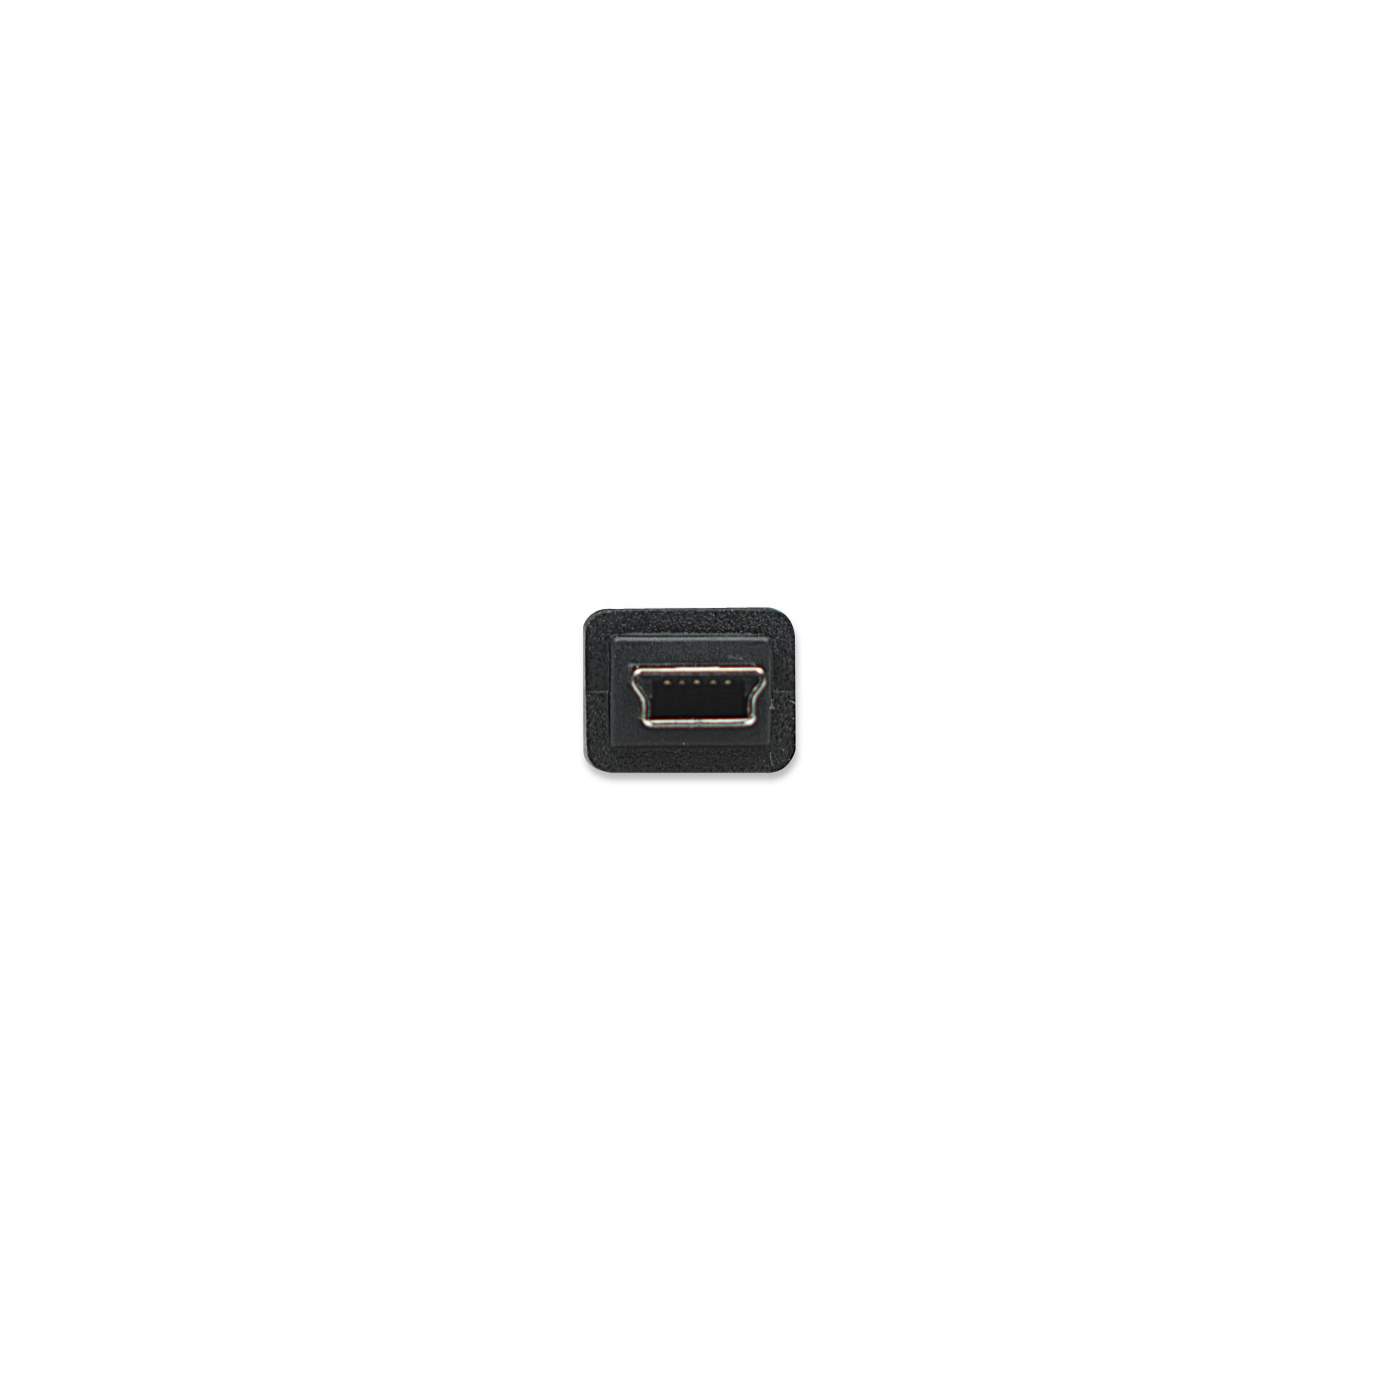 Hi-Speed USB Mini-B Device Cable Image 5